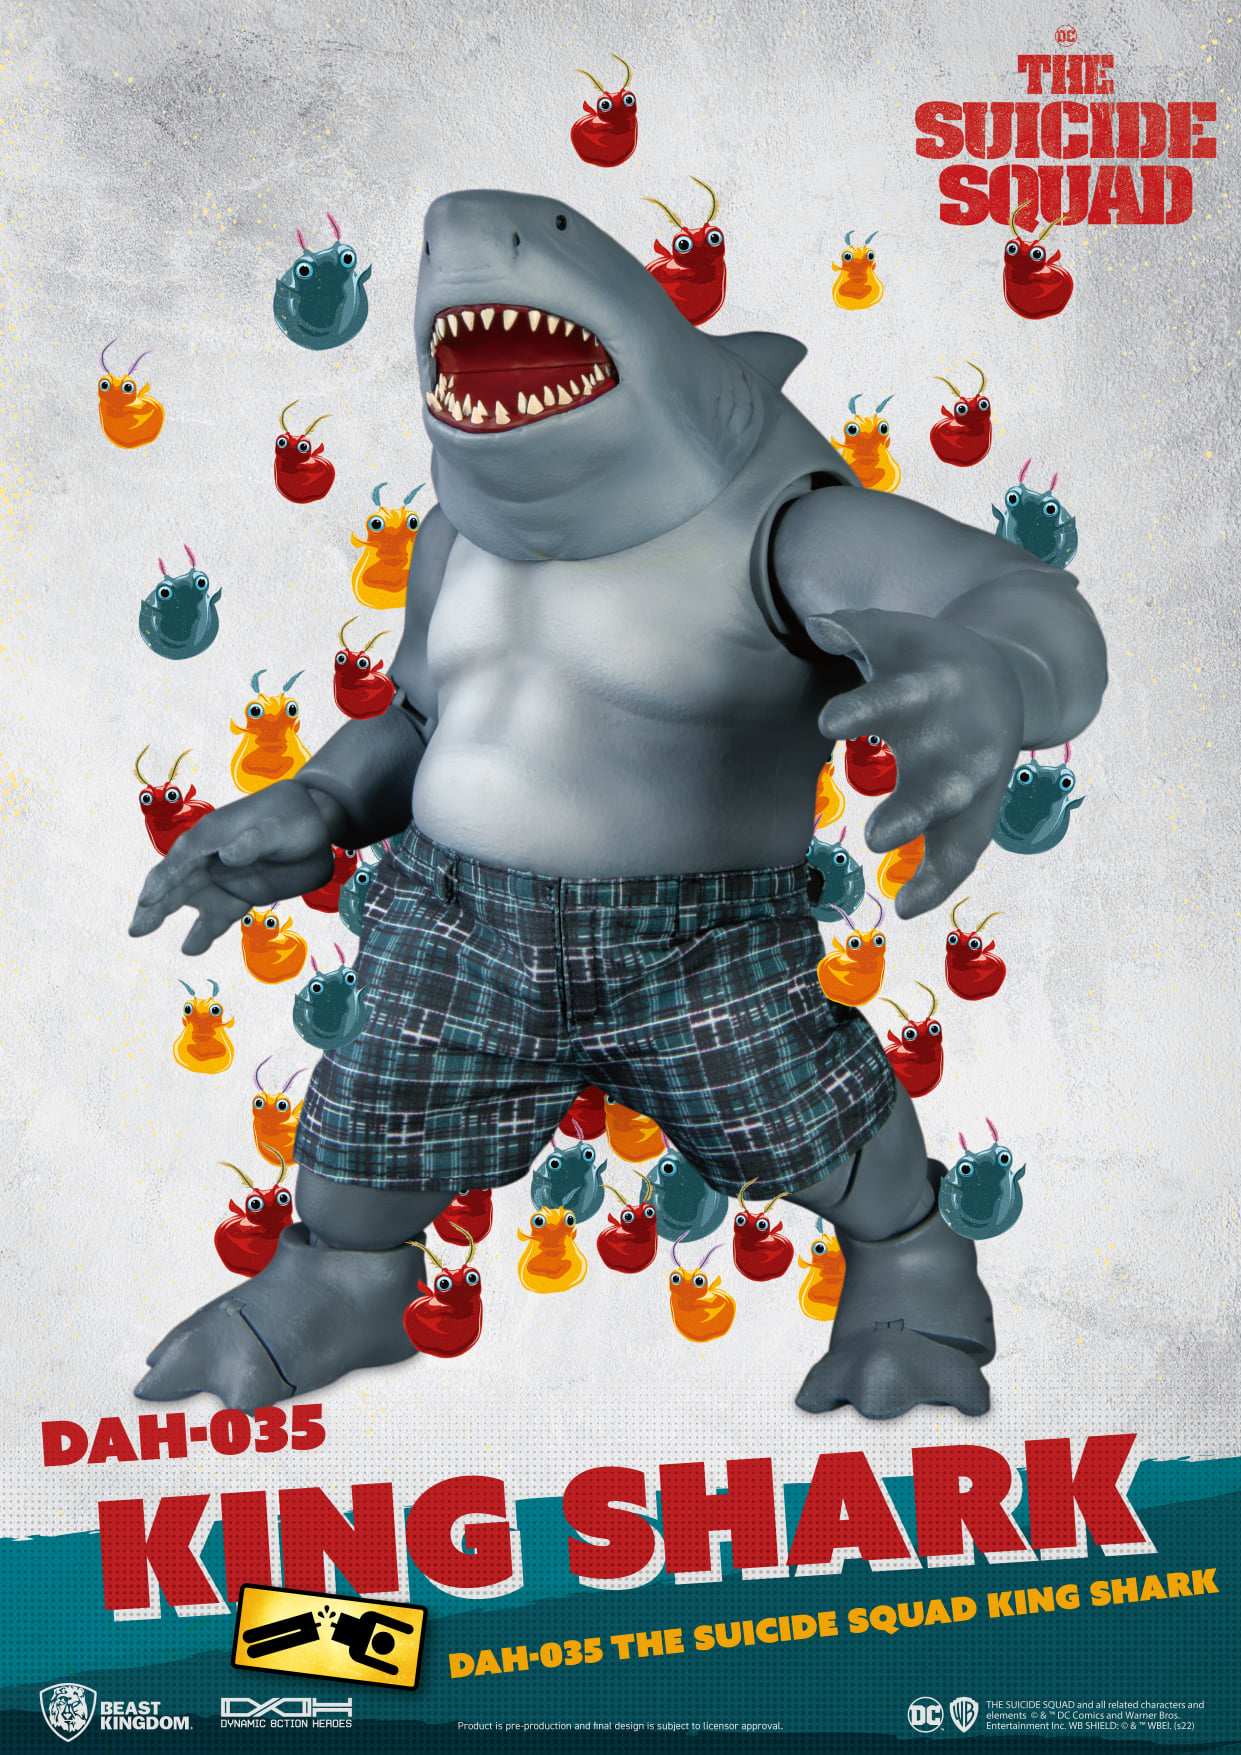 DAH-King-Shark-002.jpg